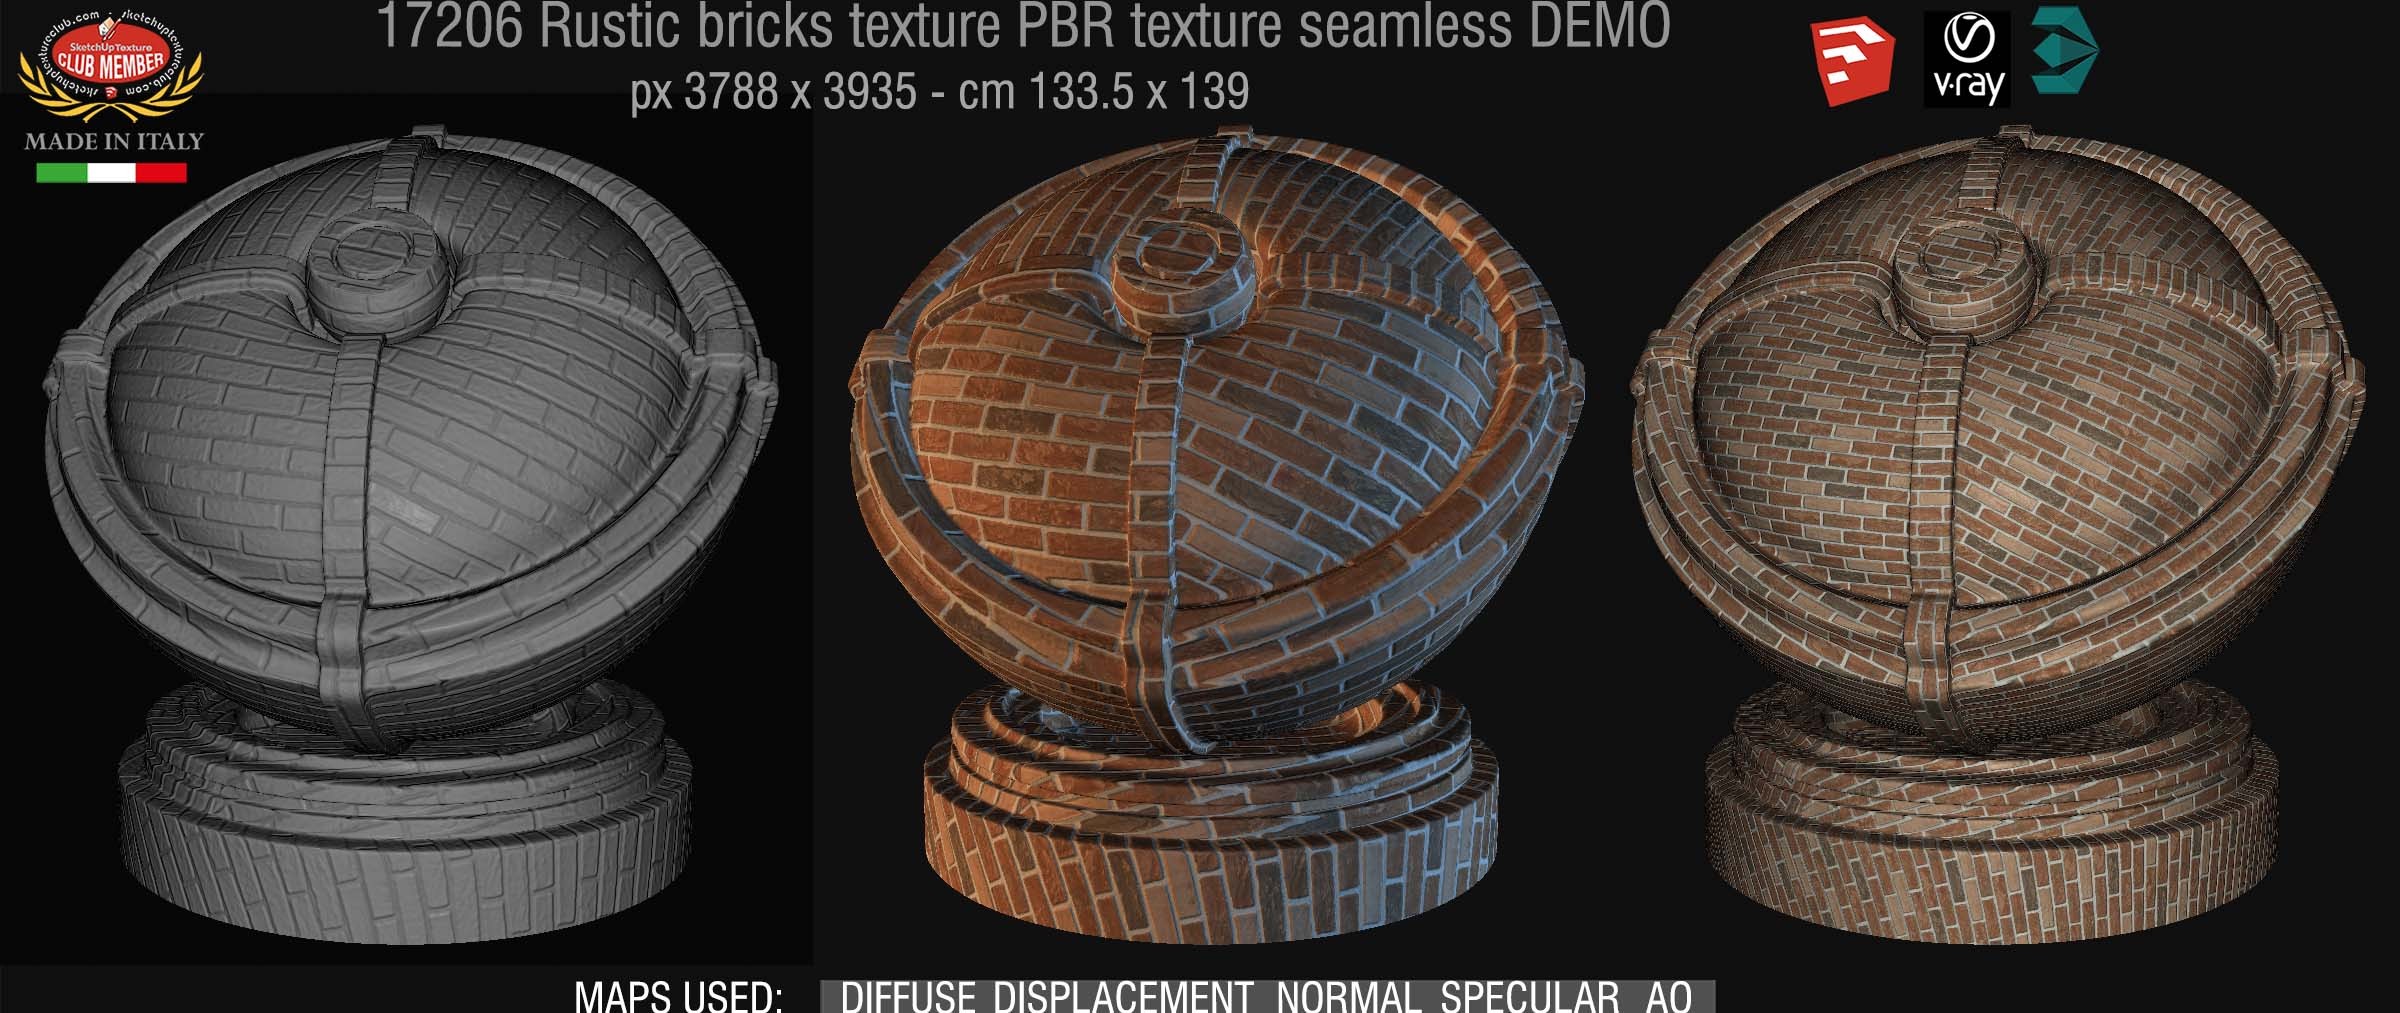 17206 Rustic bricks PBR texture seamless DEMO